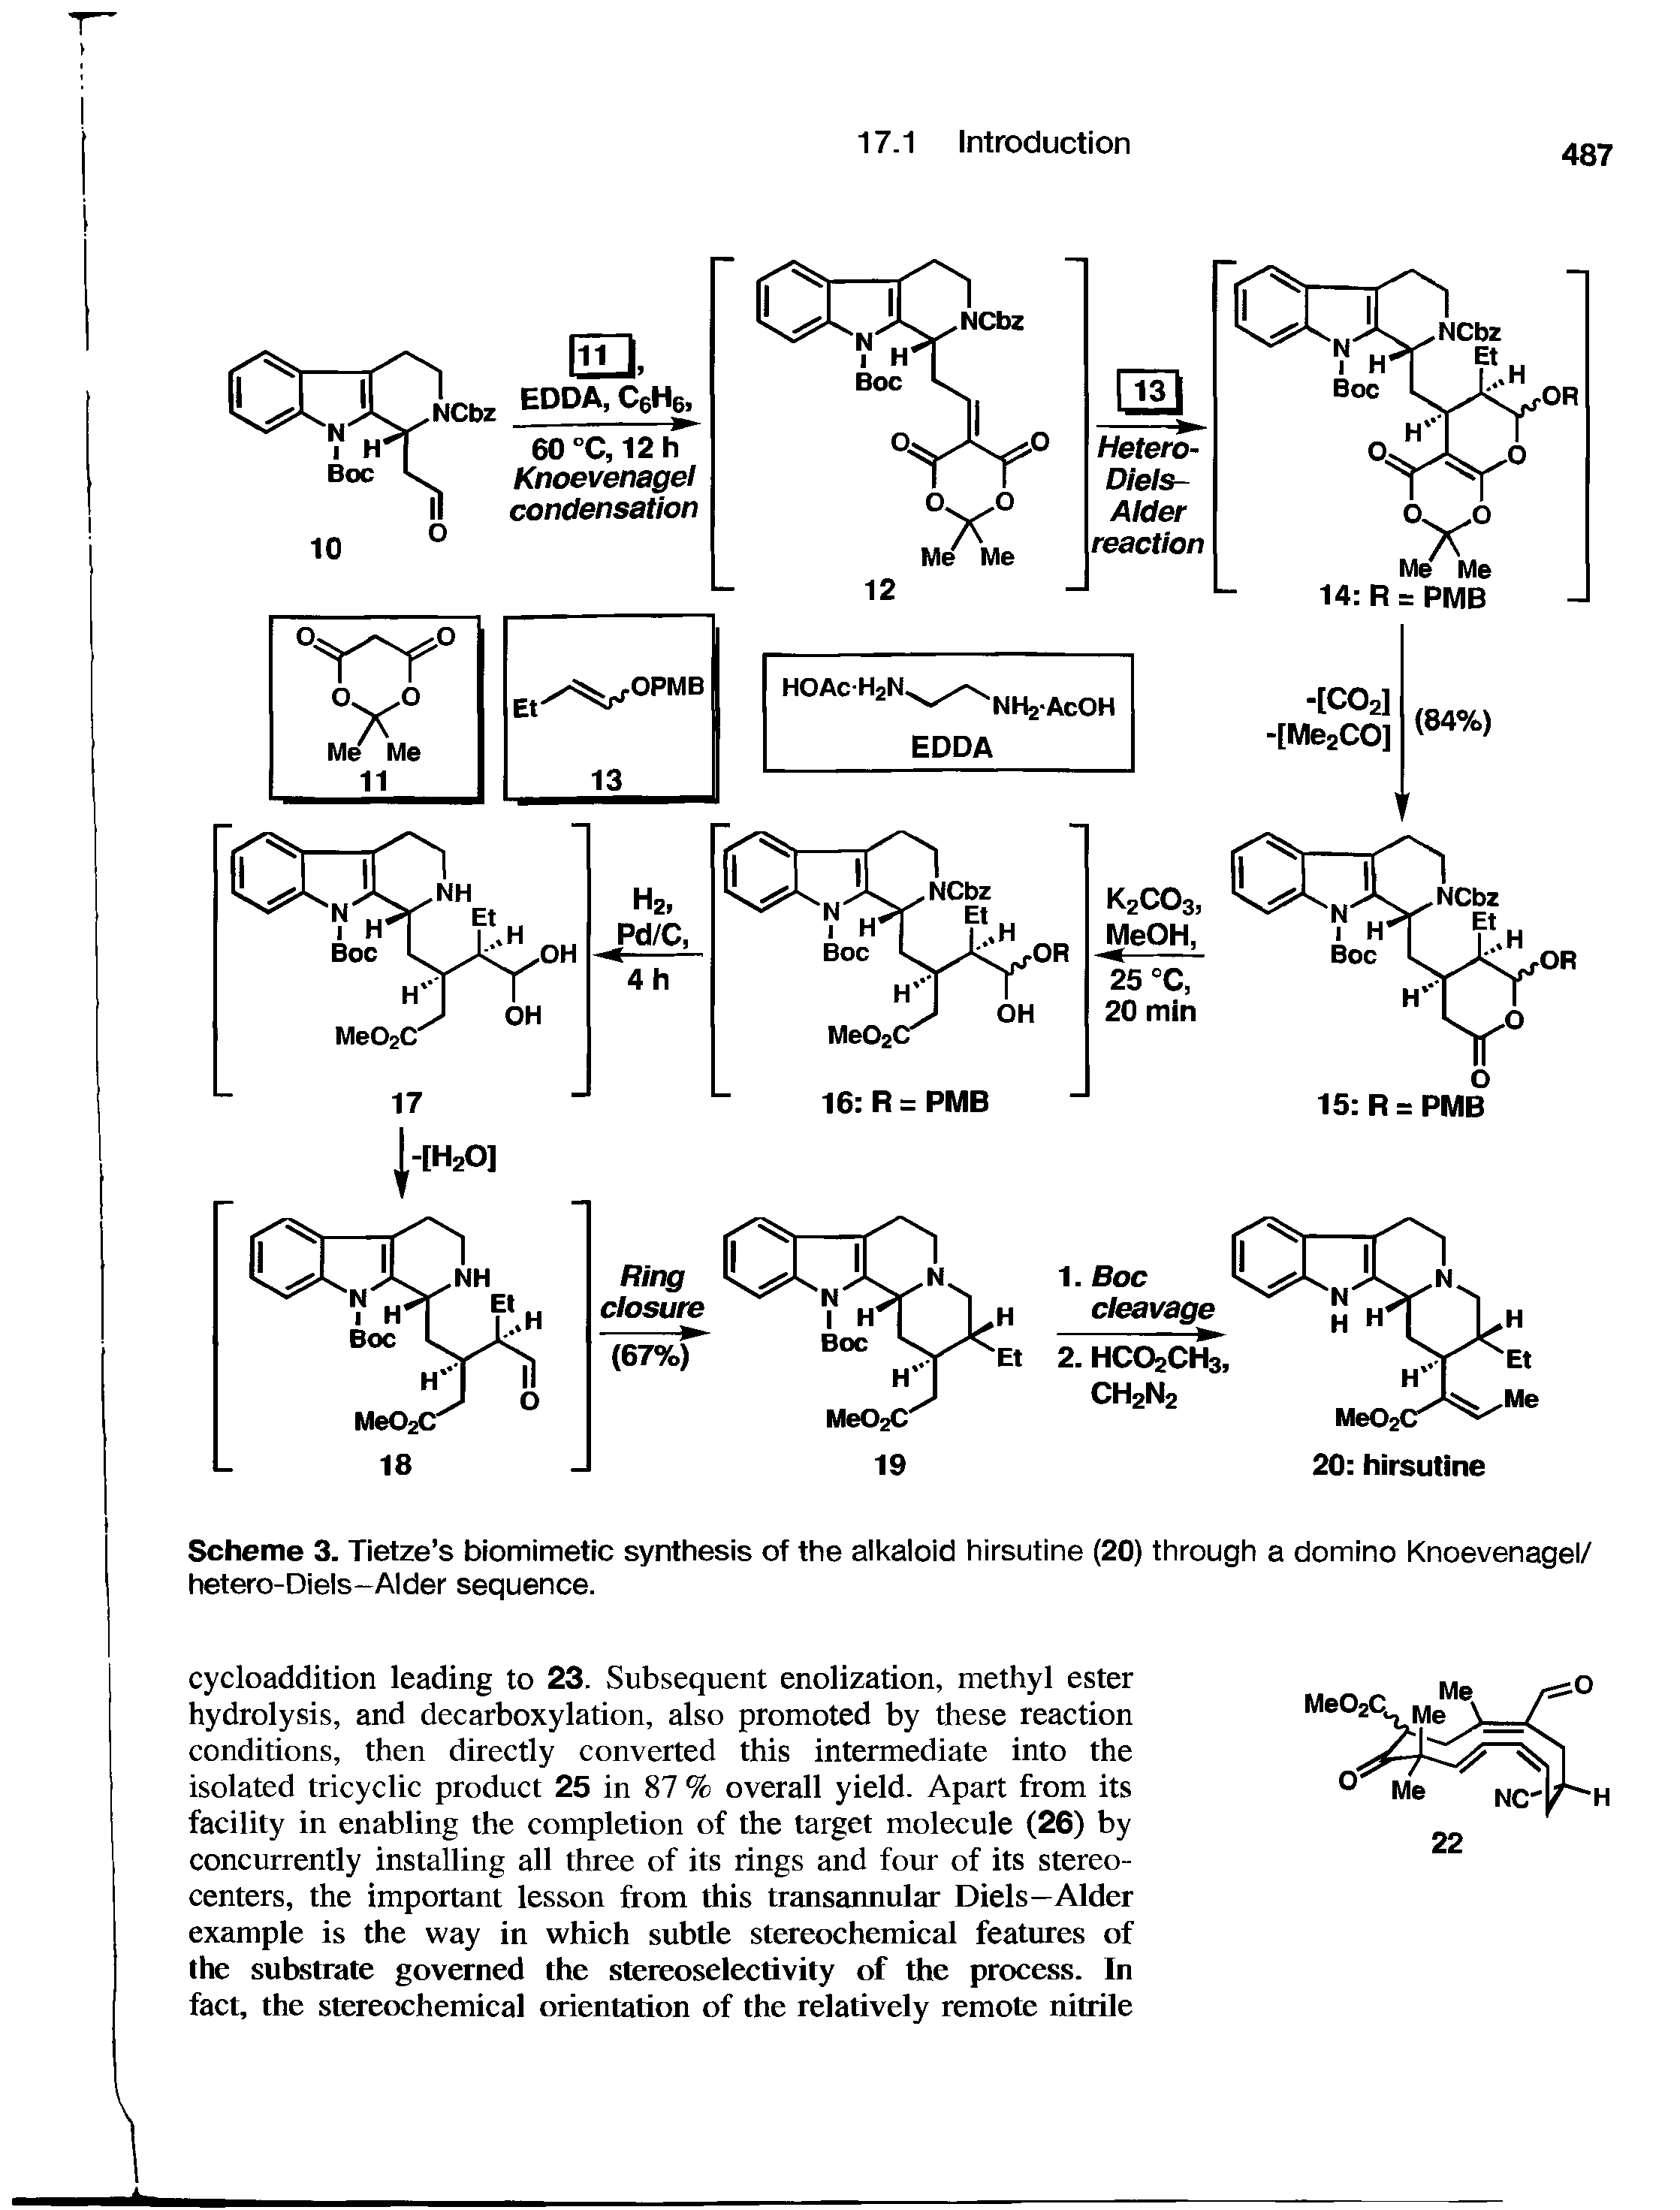 Scheme 3. Tietze s biomimetic synthesis of the alkaloid hirsutine (20) through a domino Knoevenagel/ hetero-Diels-Alder sequence.